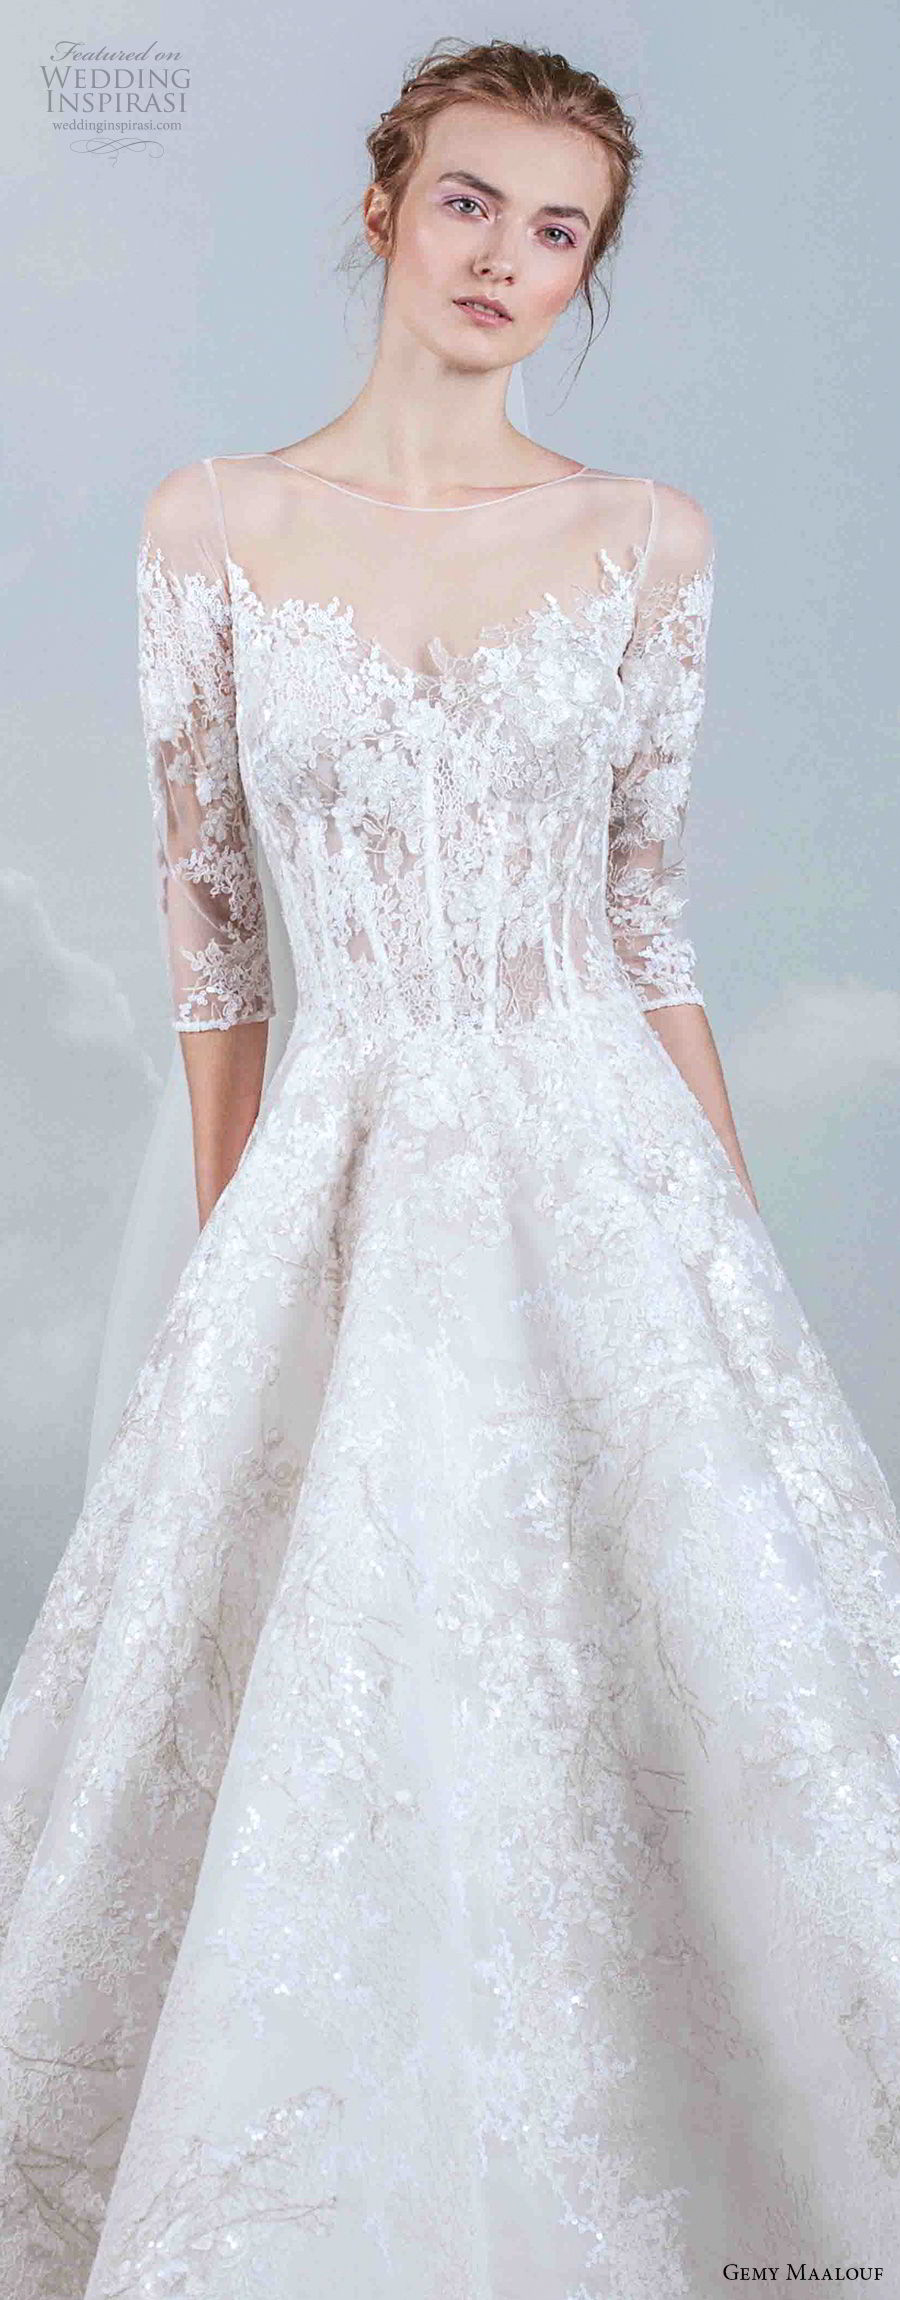 Gemy Maalouf 2019 Wedding Dresses — “The Royal Bride” Bridal Collection ...